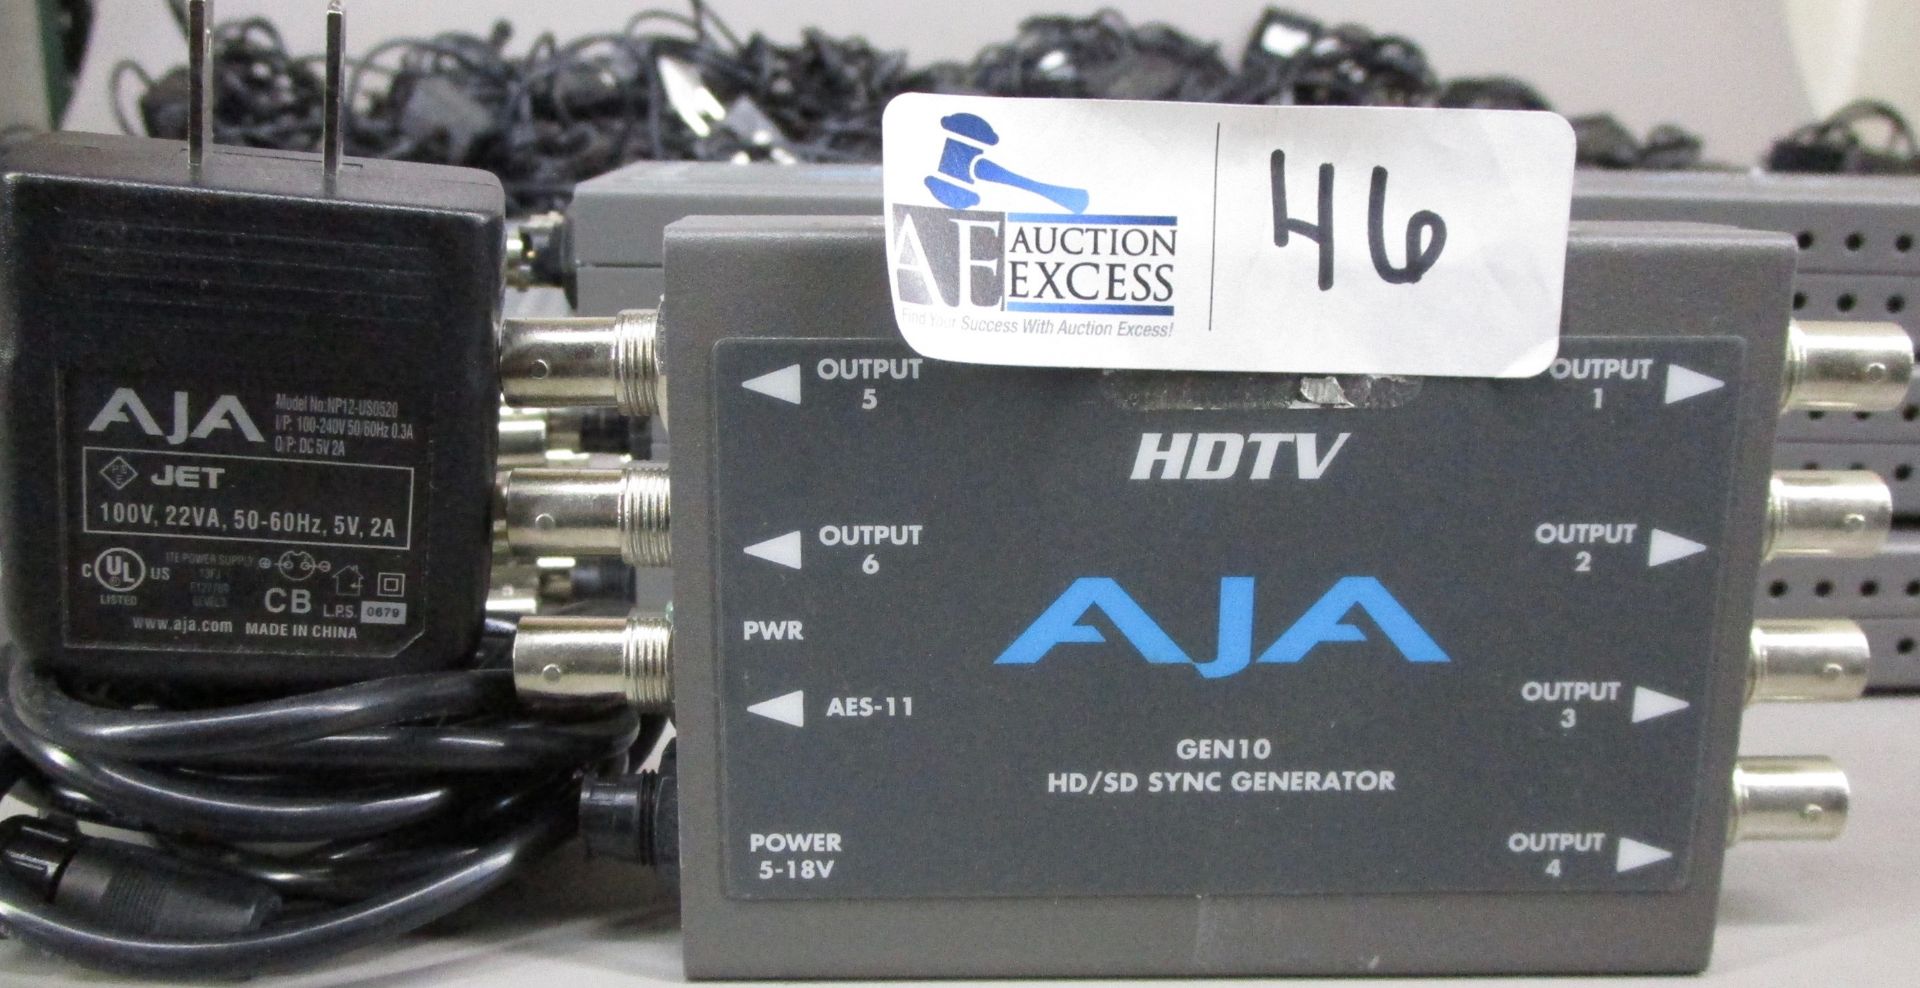 BOX AJA HDTV GEN10 HD/SD SYNC GENERATOR WITH POWER SUPPLIES